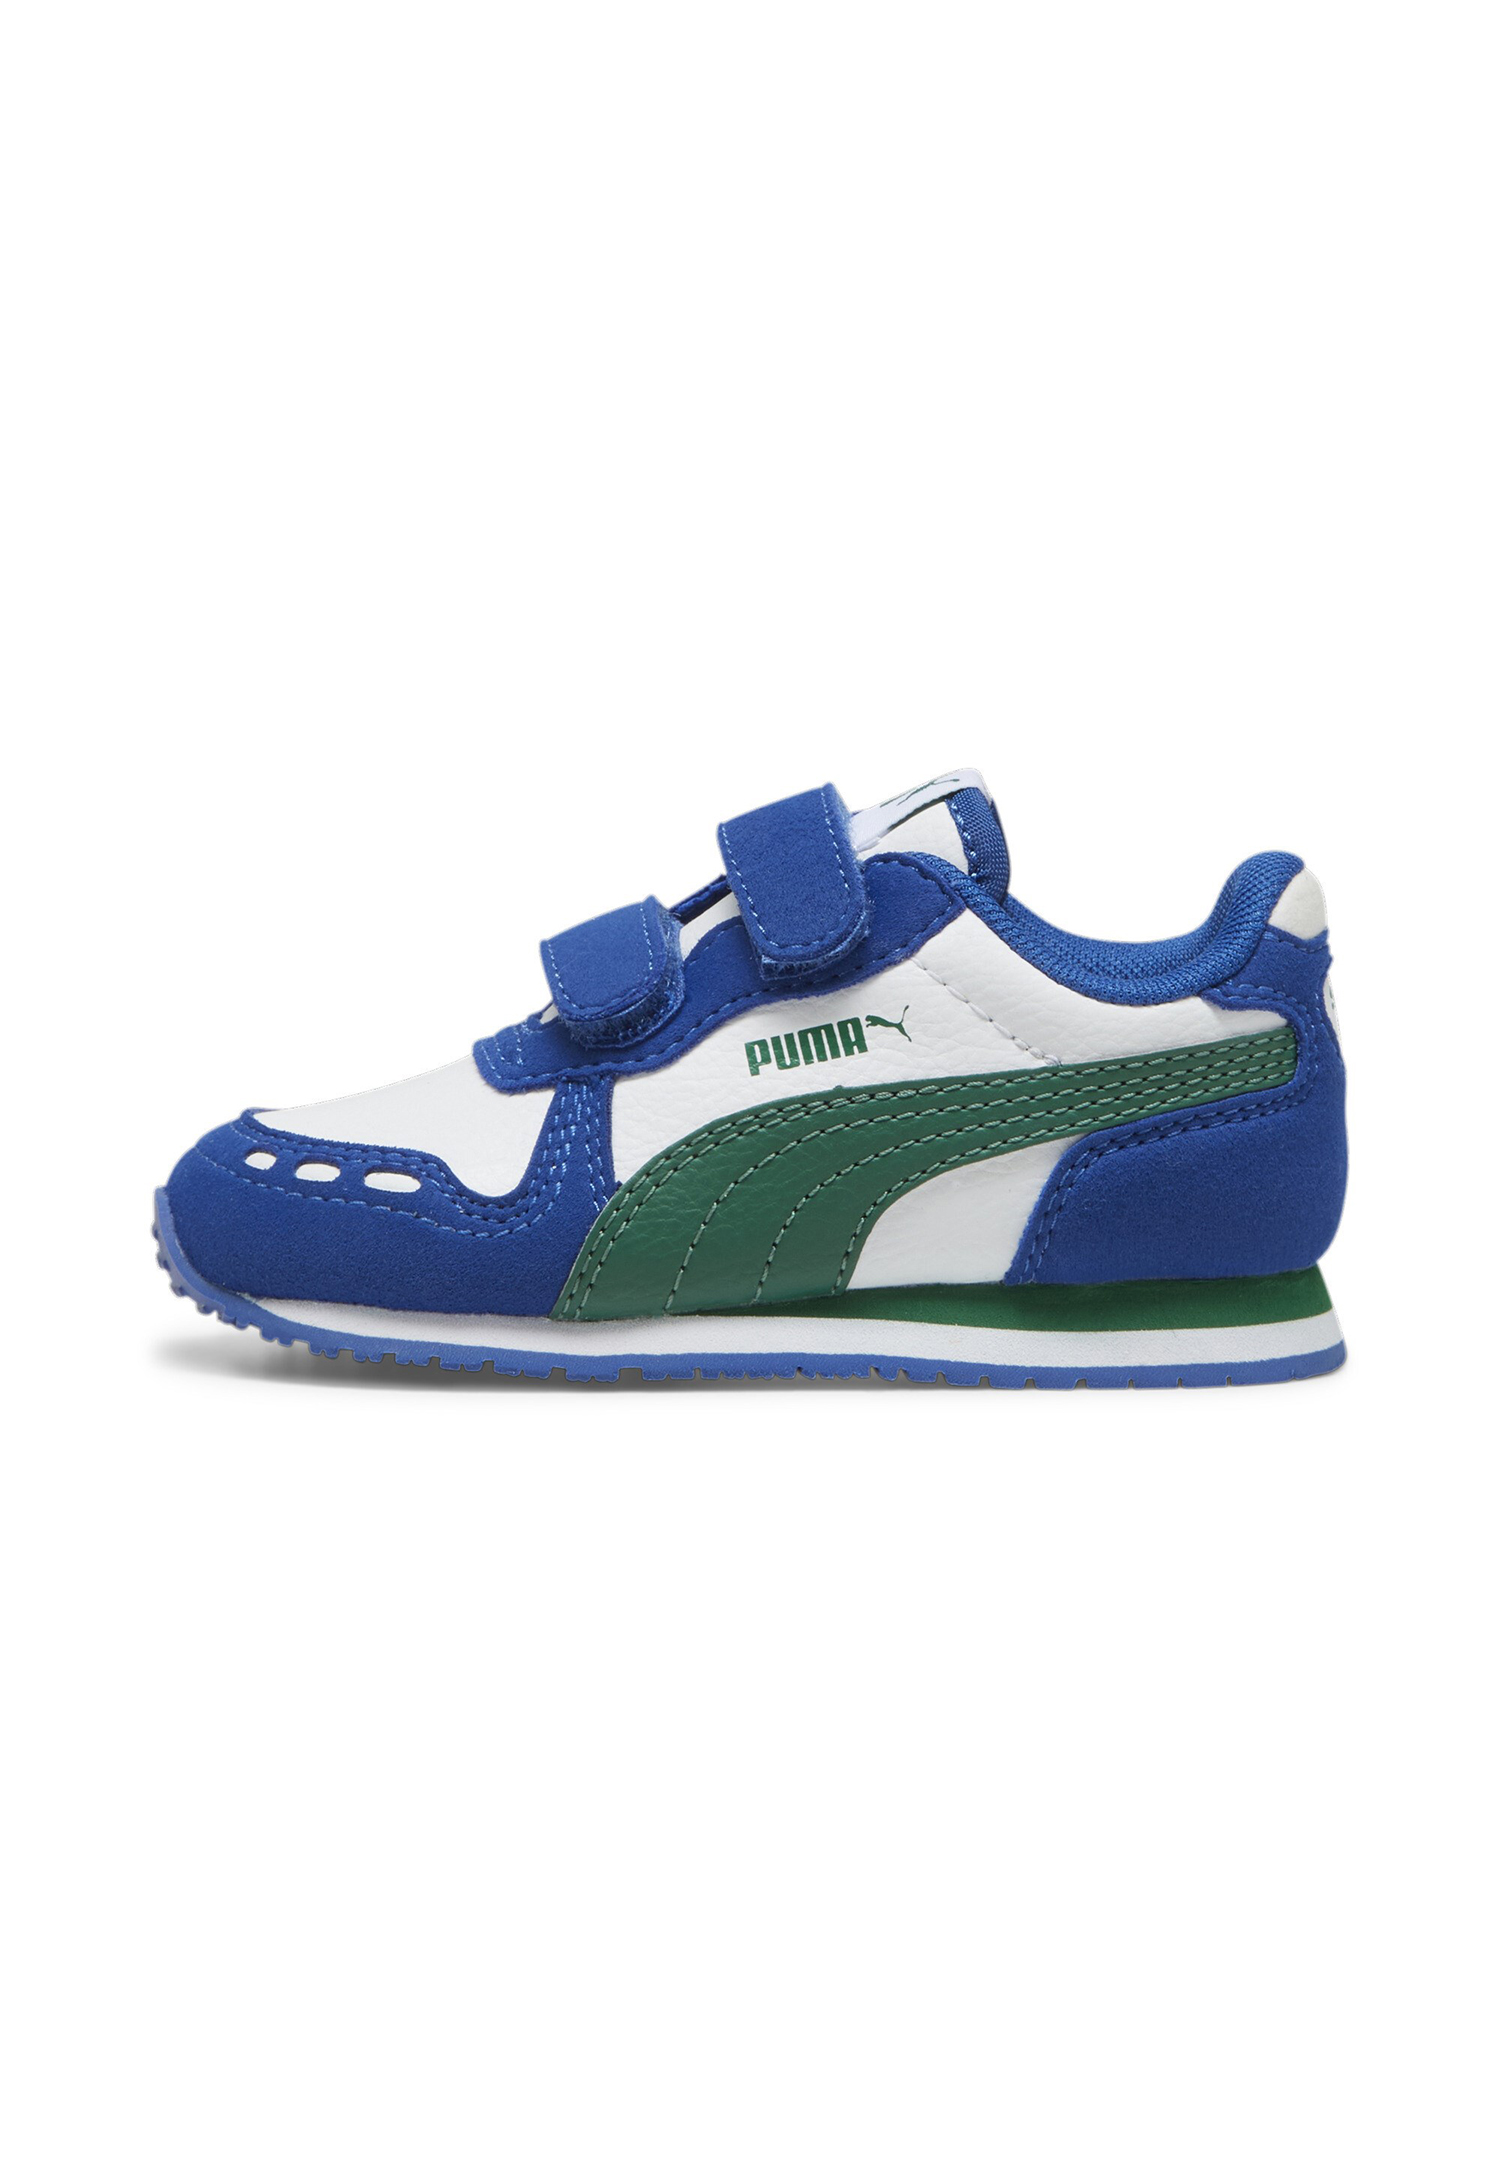 PUMA Cabana Racer SL 20 V Inf Kinder Sneaker Turnschuhe 383731 13 blau/weiß/grün